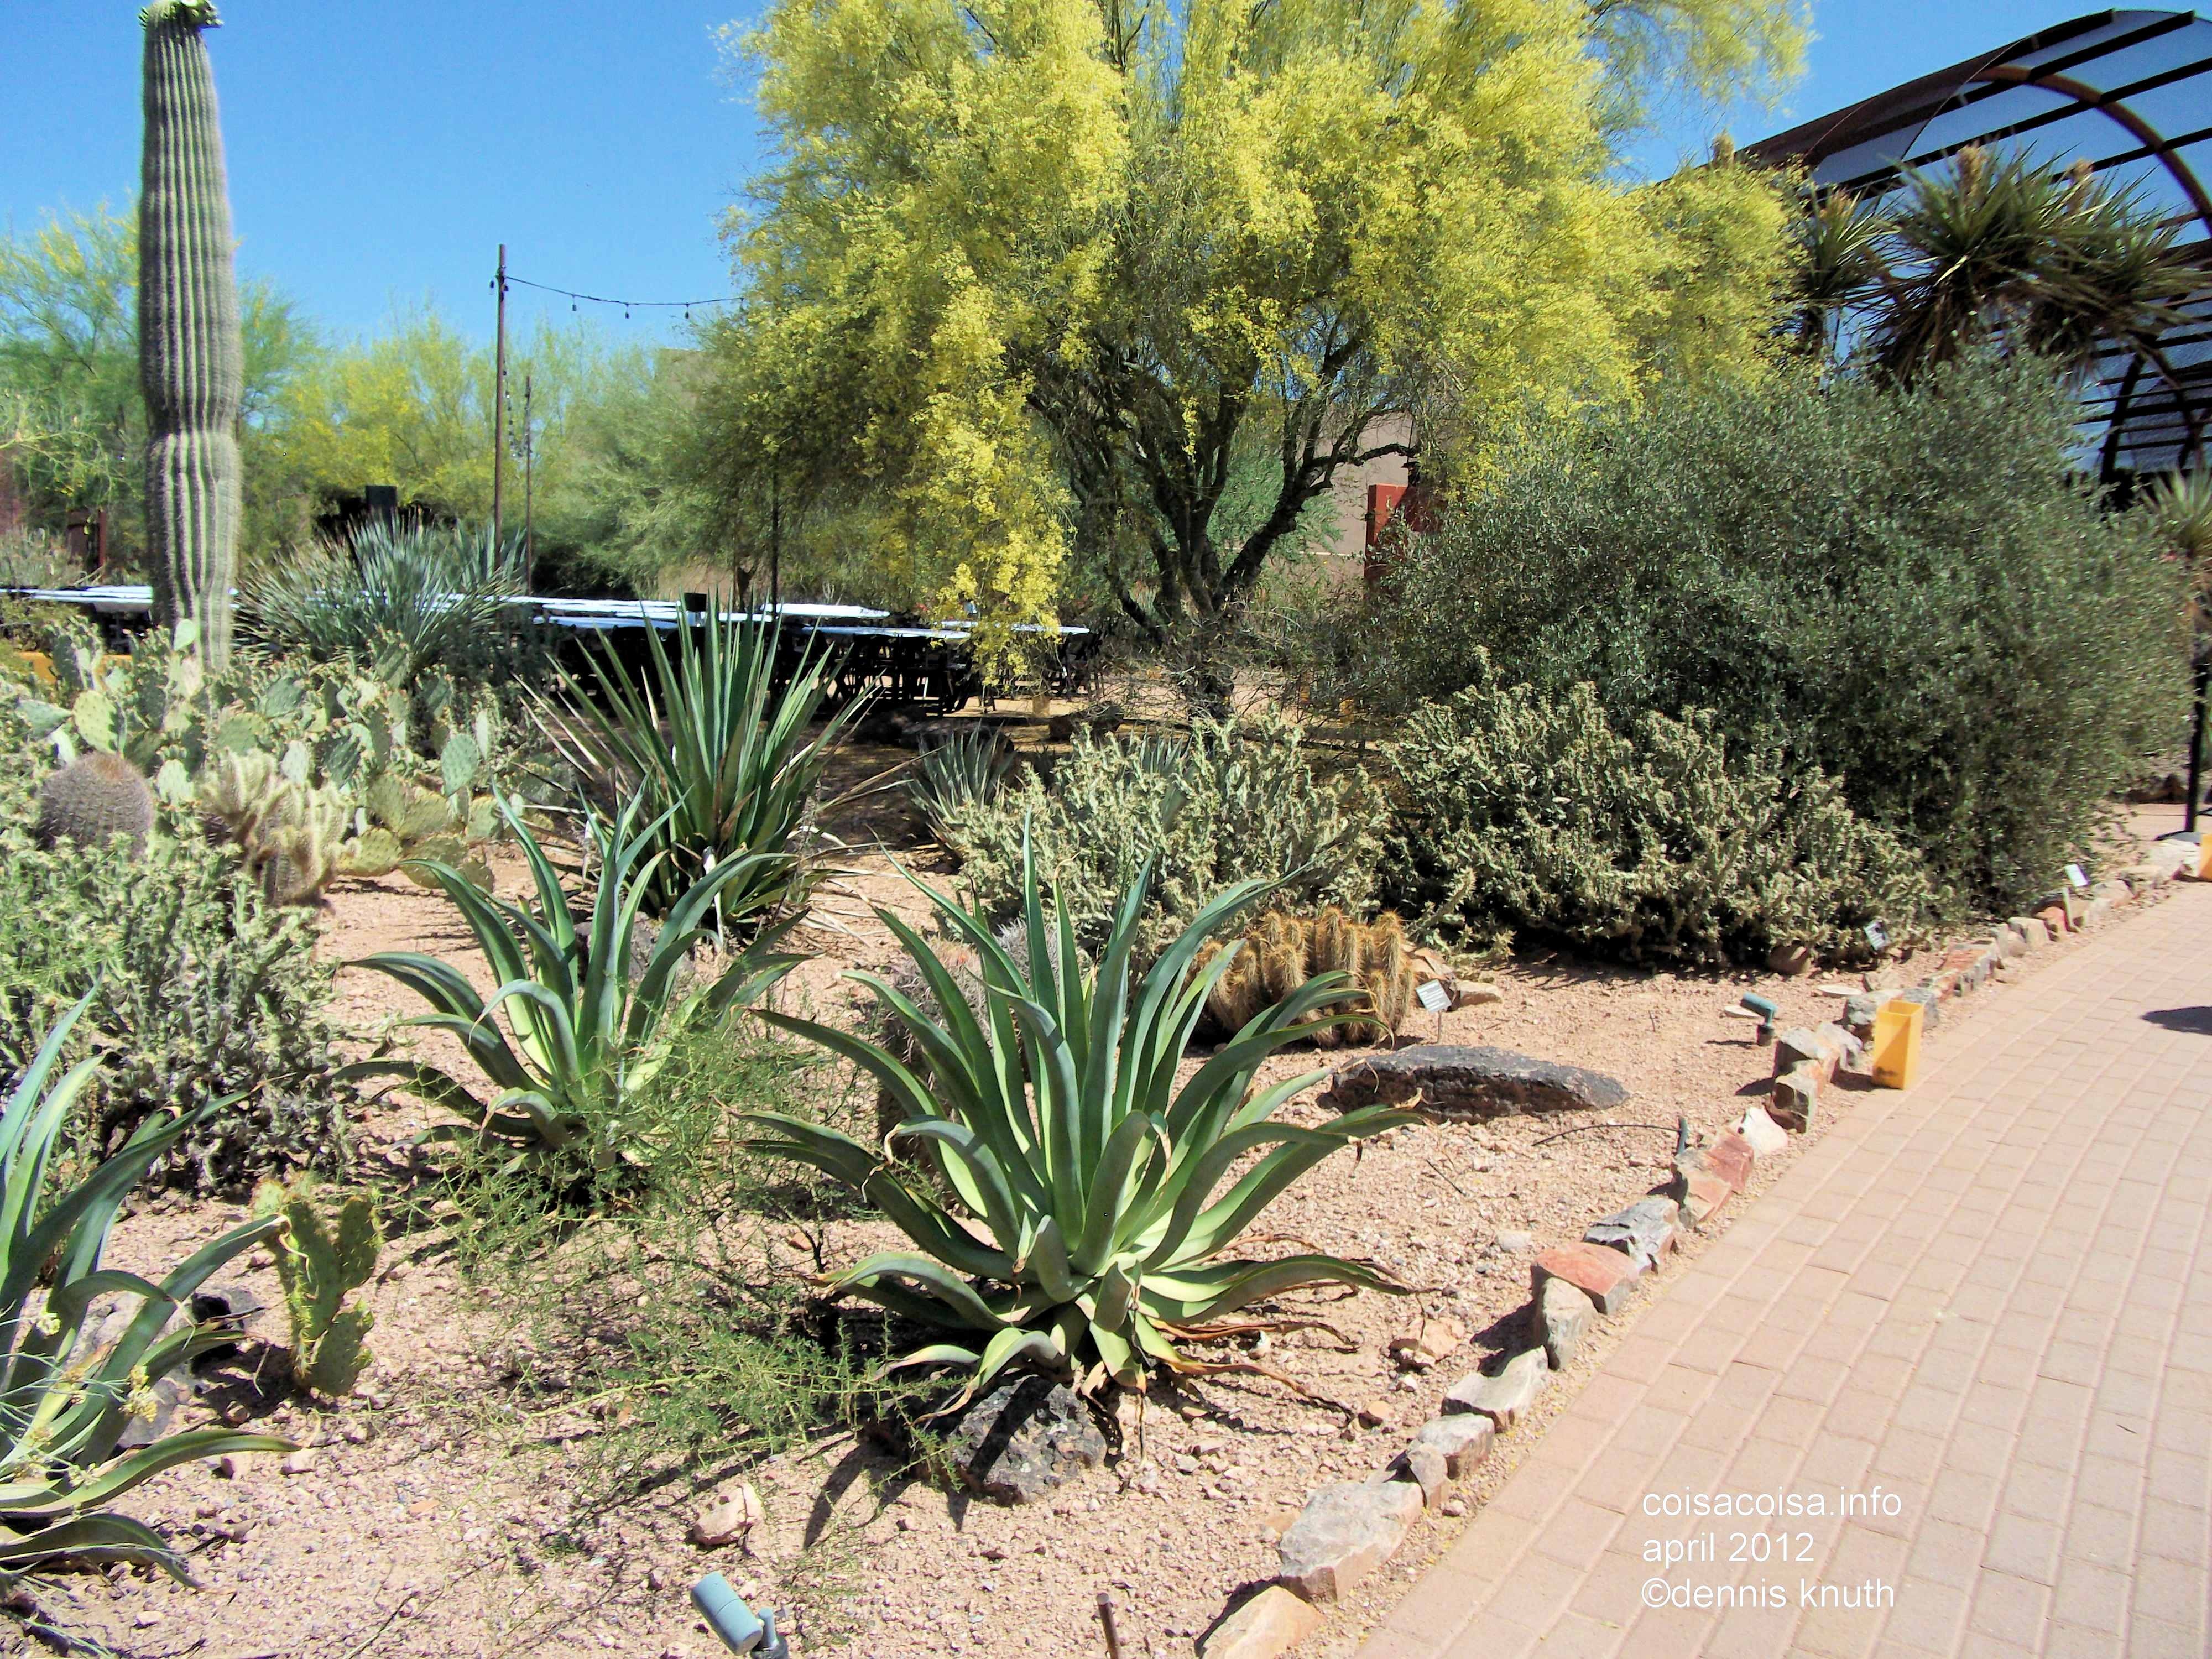 Pathway of groomed flora in the Phoenix Botanical Garden